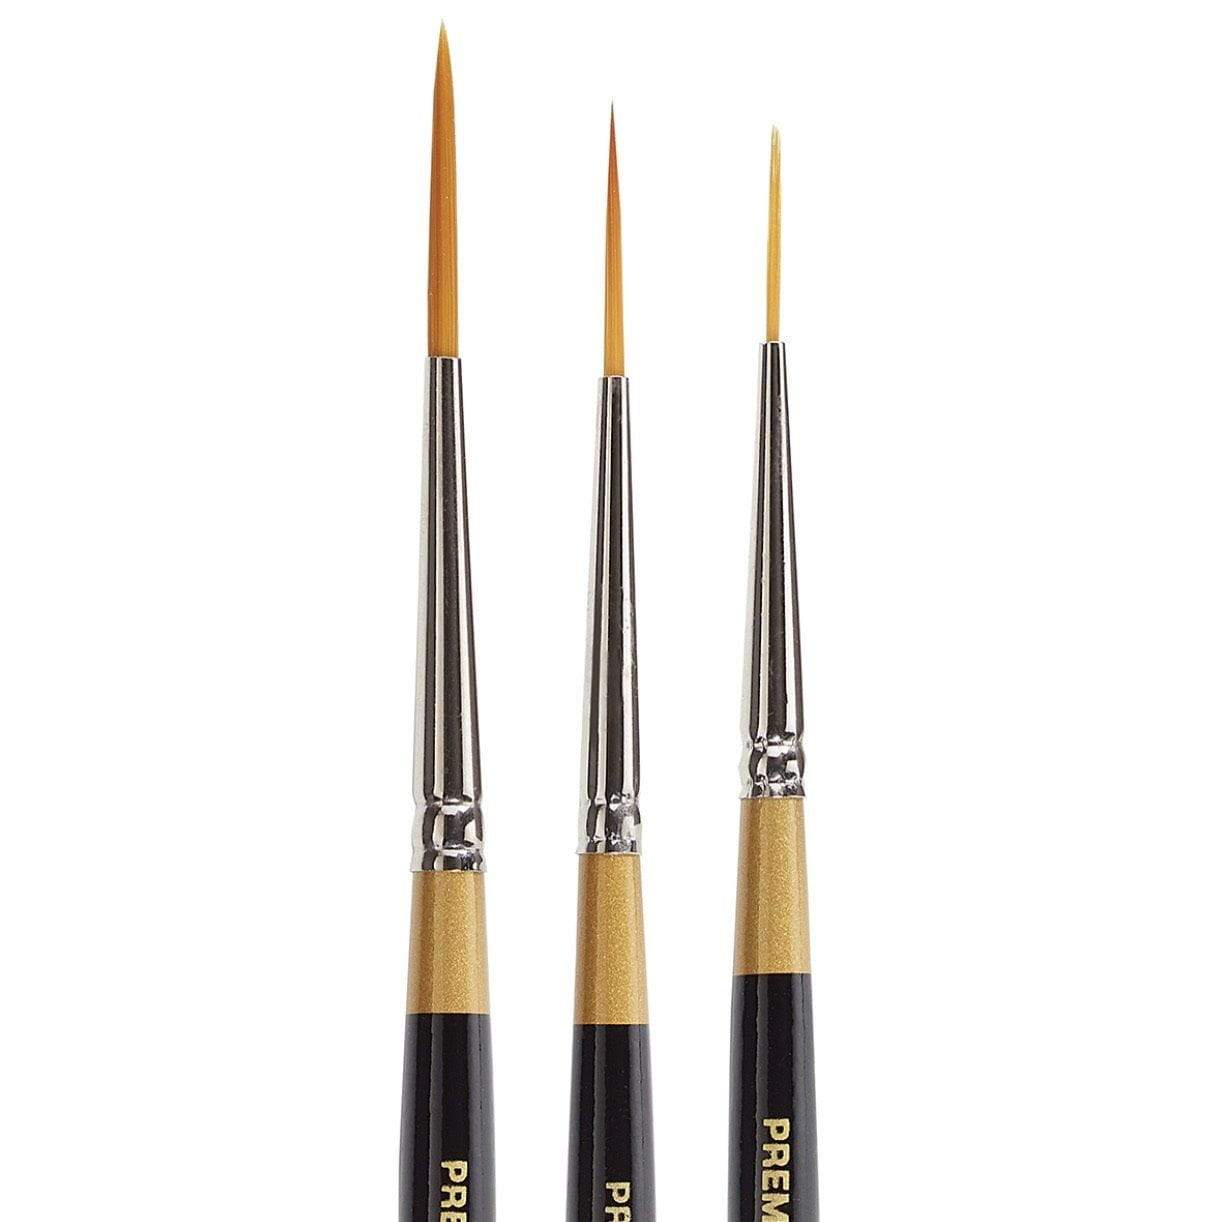 KINGART® Original Gold® Aqua Acrylic Handle Series, Premium Golden Taklon,  Multimedia Artist Brushes, Gift Box, Set of 8